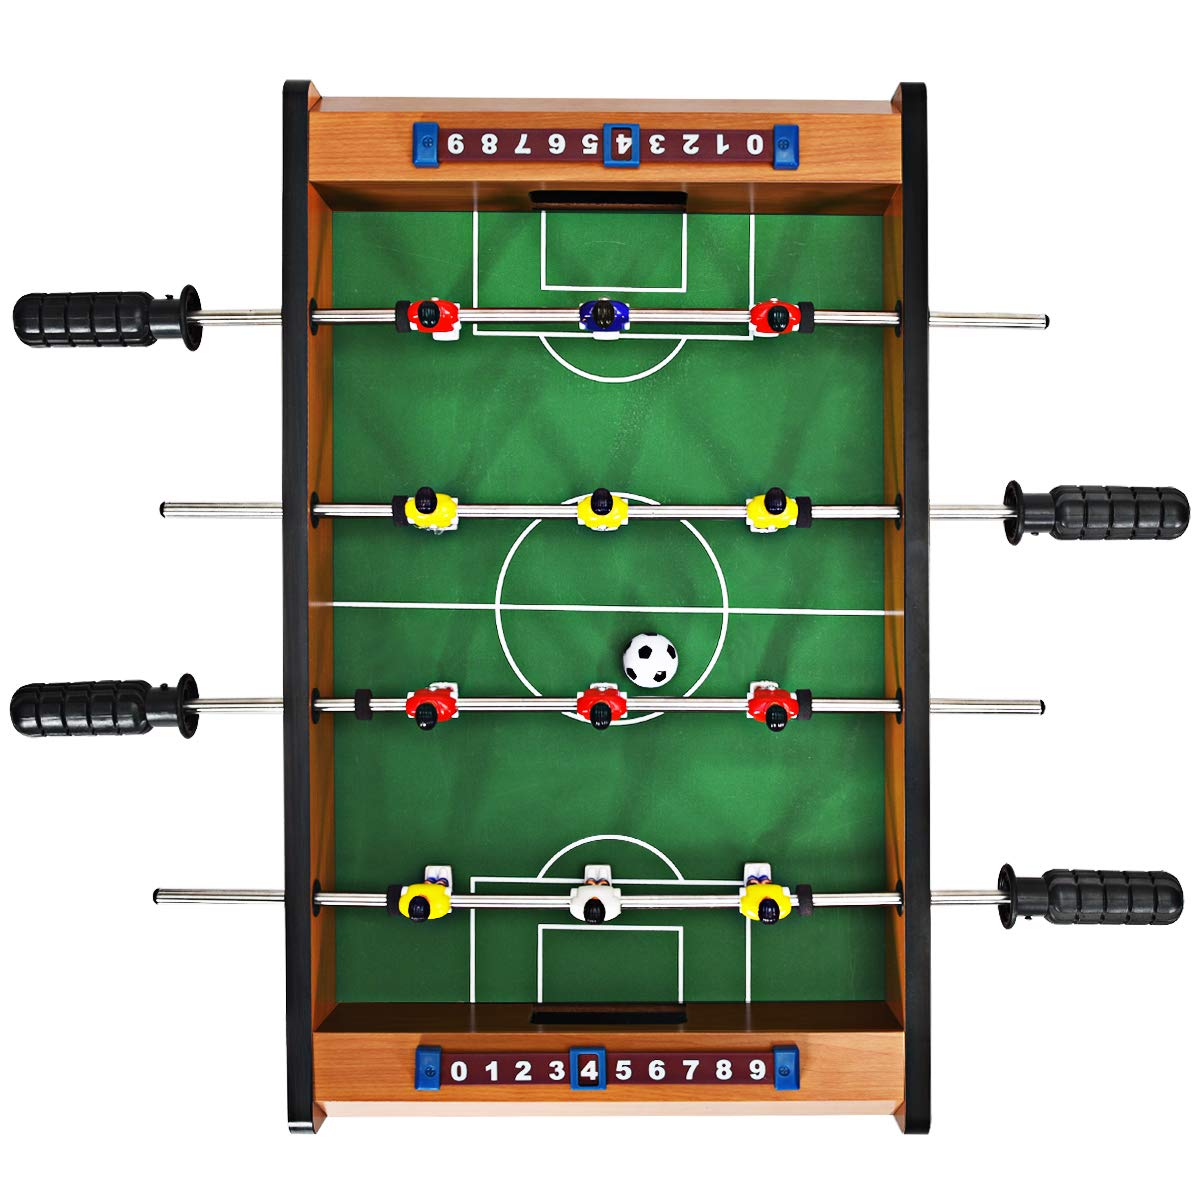 Giantex 20" Easily Assemble Wooden Mini Foosball Table Top w/ Footballs